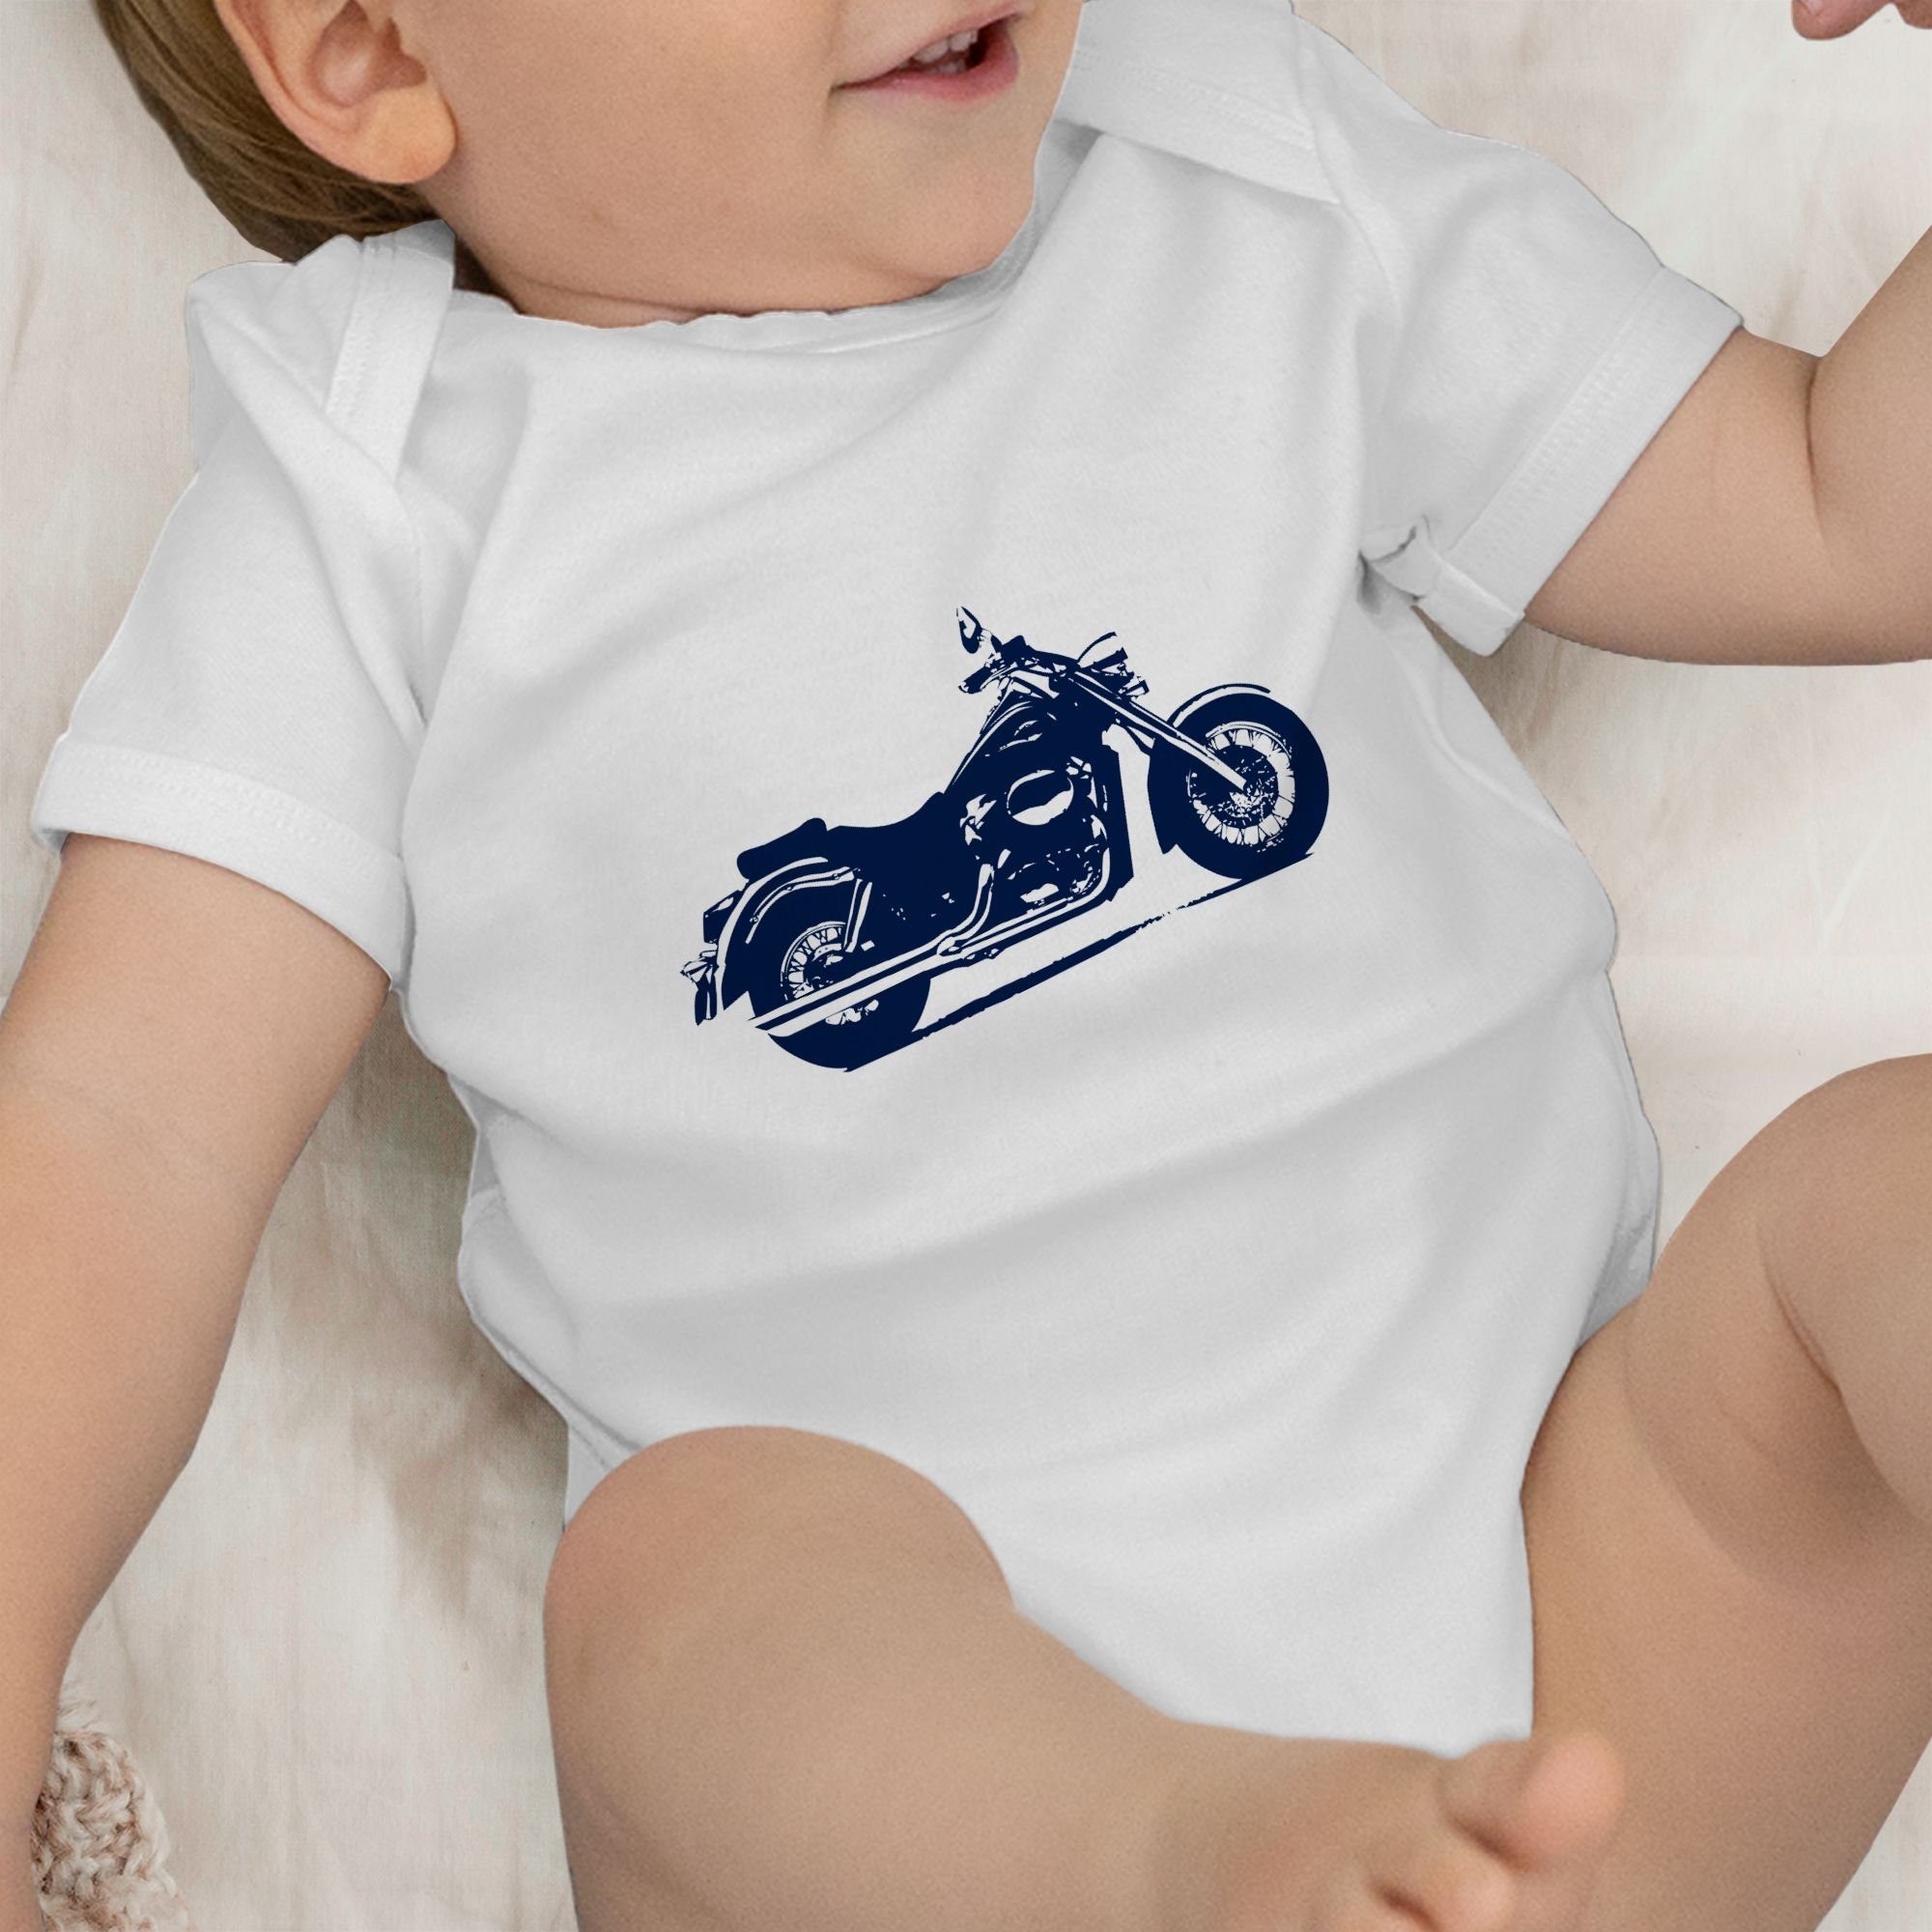 Shirtracer Motorrad und Co. 1 Shirtbody Weiß Baby Bagger Traktor